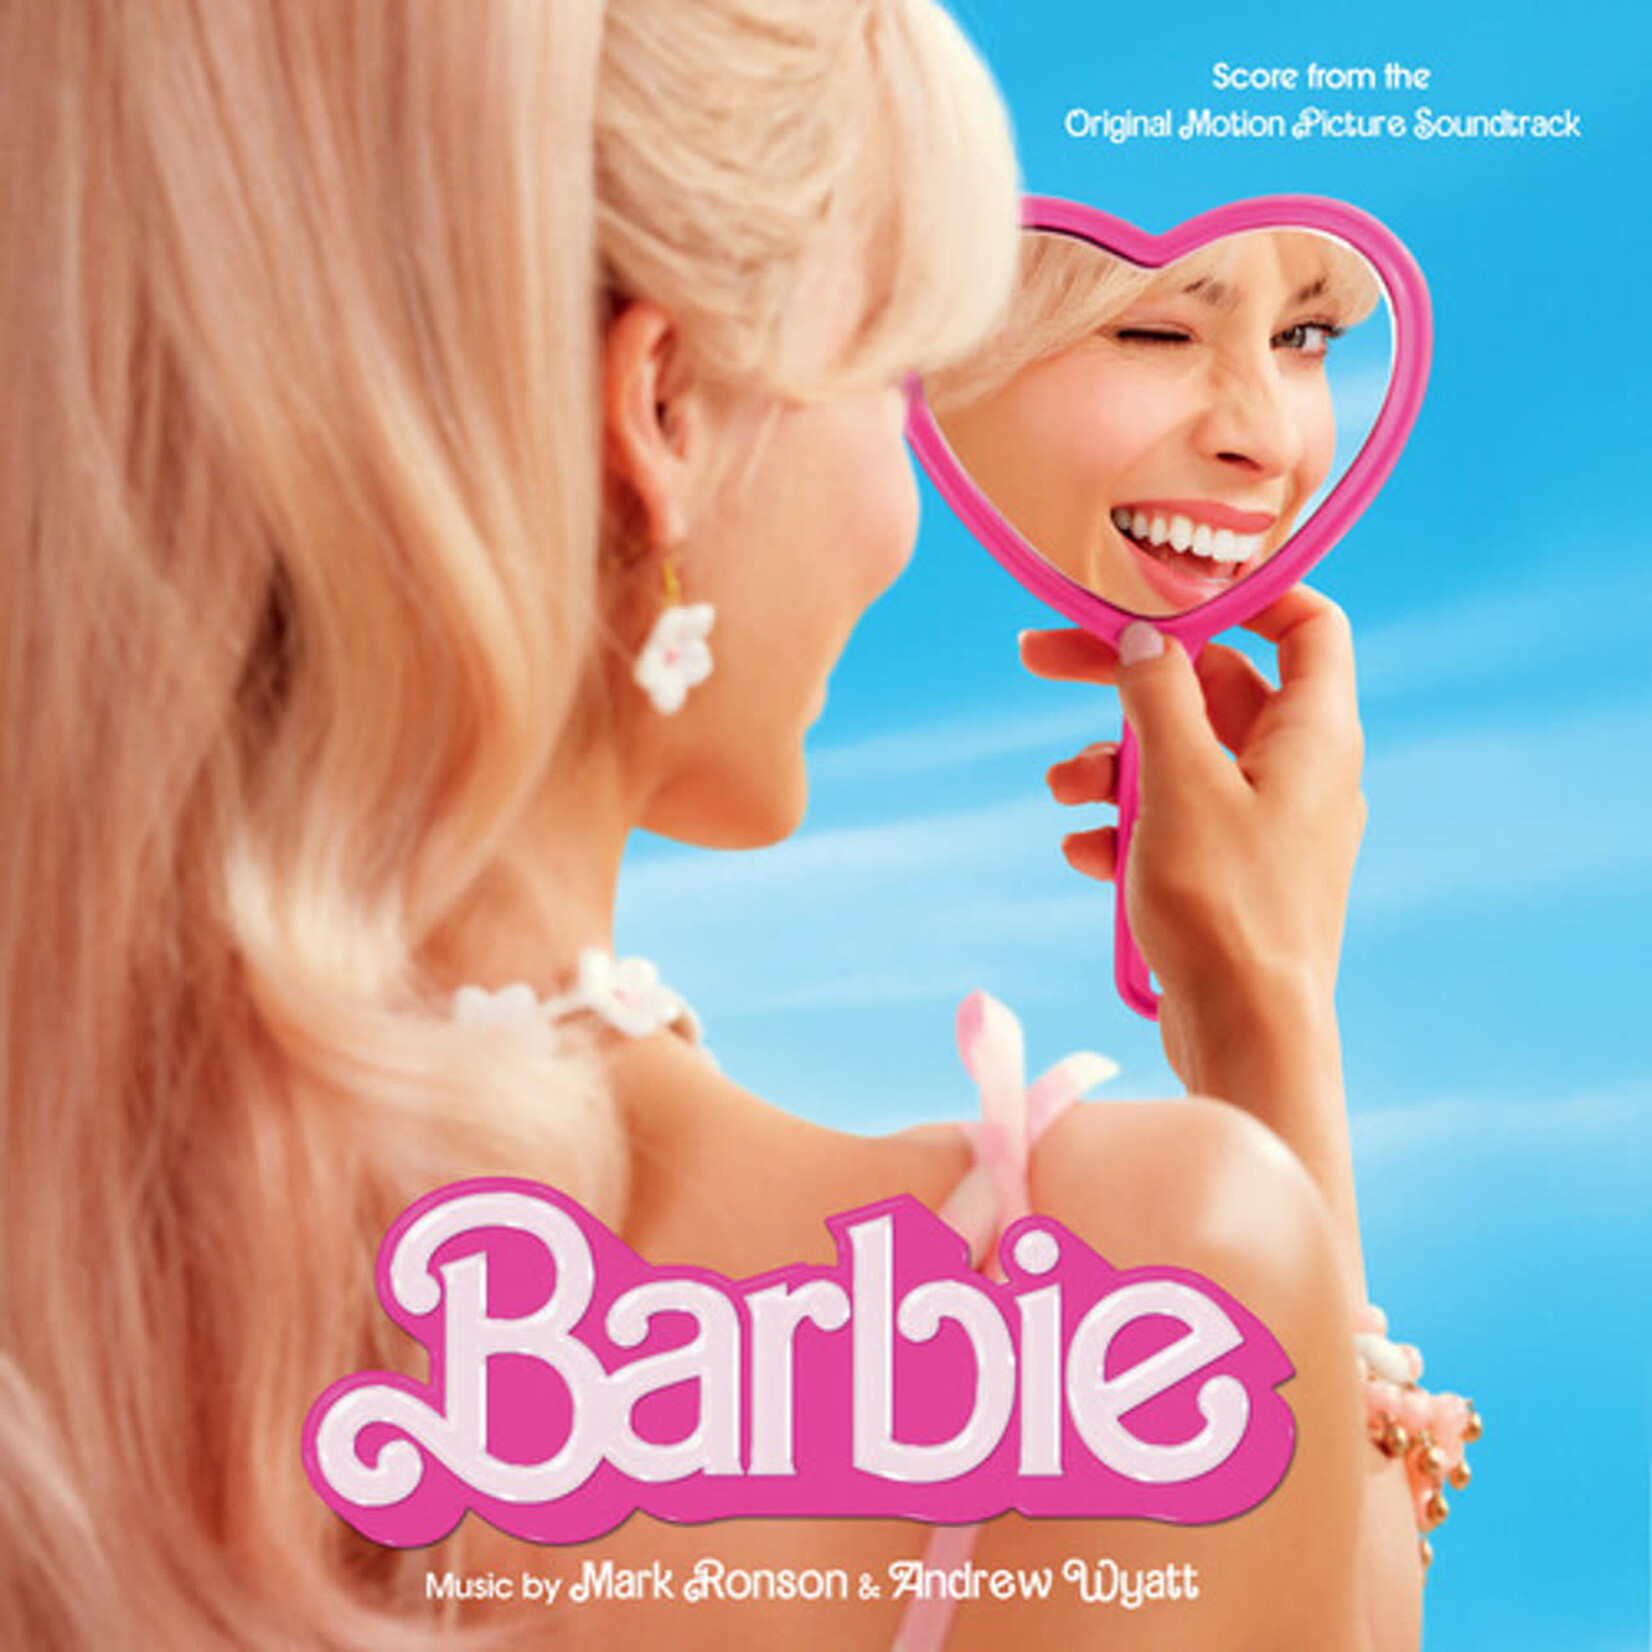 [New] Mark & Andrew Wyatt Ronson - Barbie - The Film Score (soundtrack, pink vinyl)